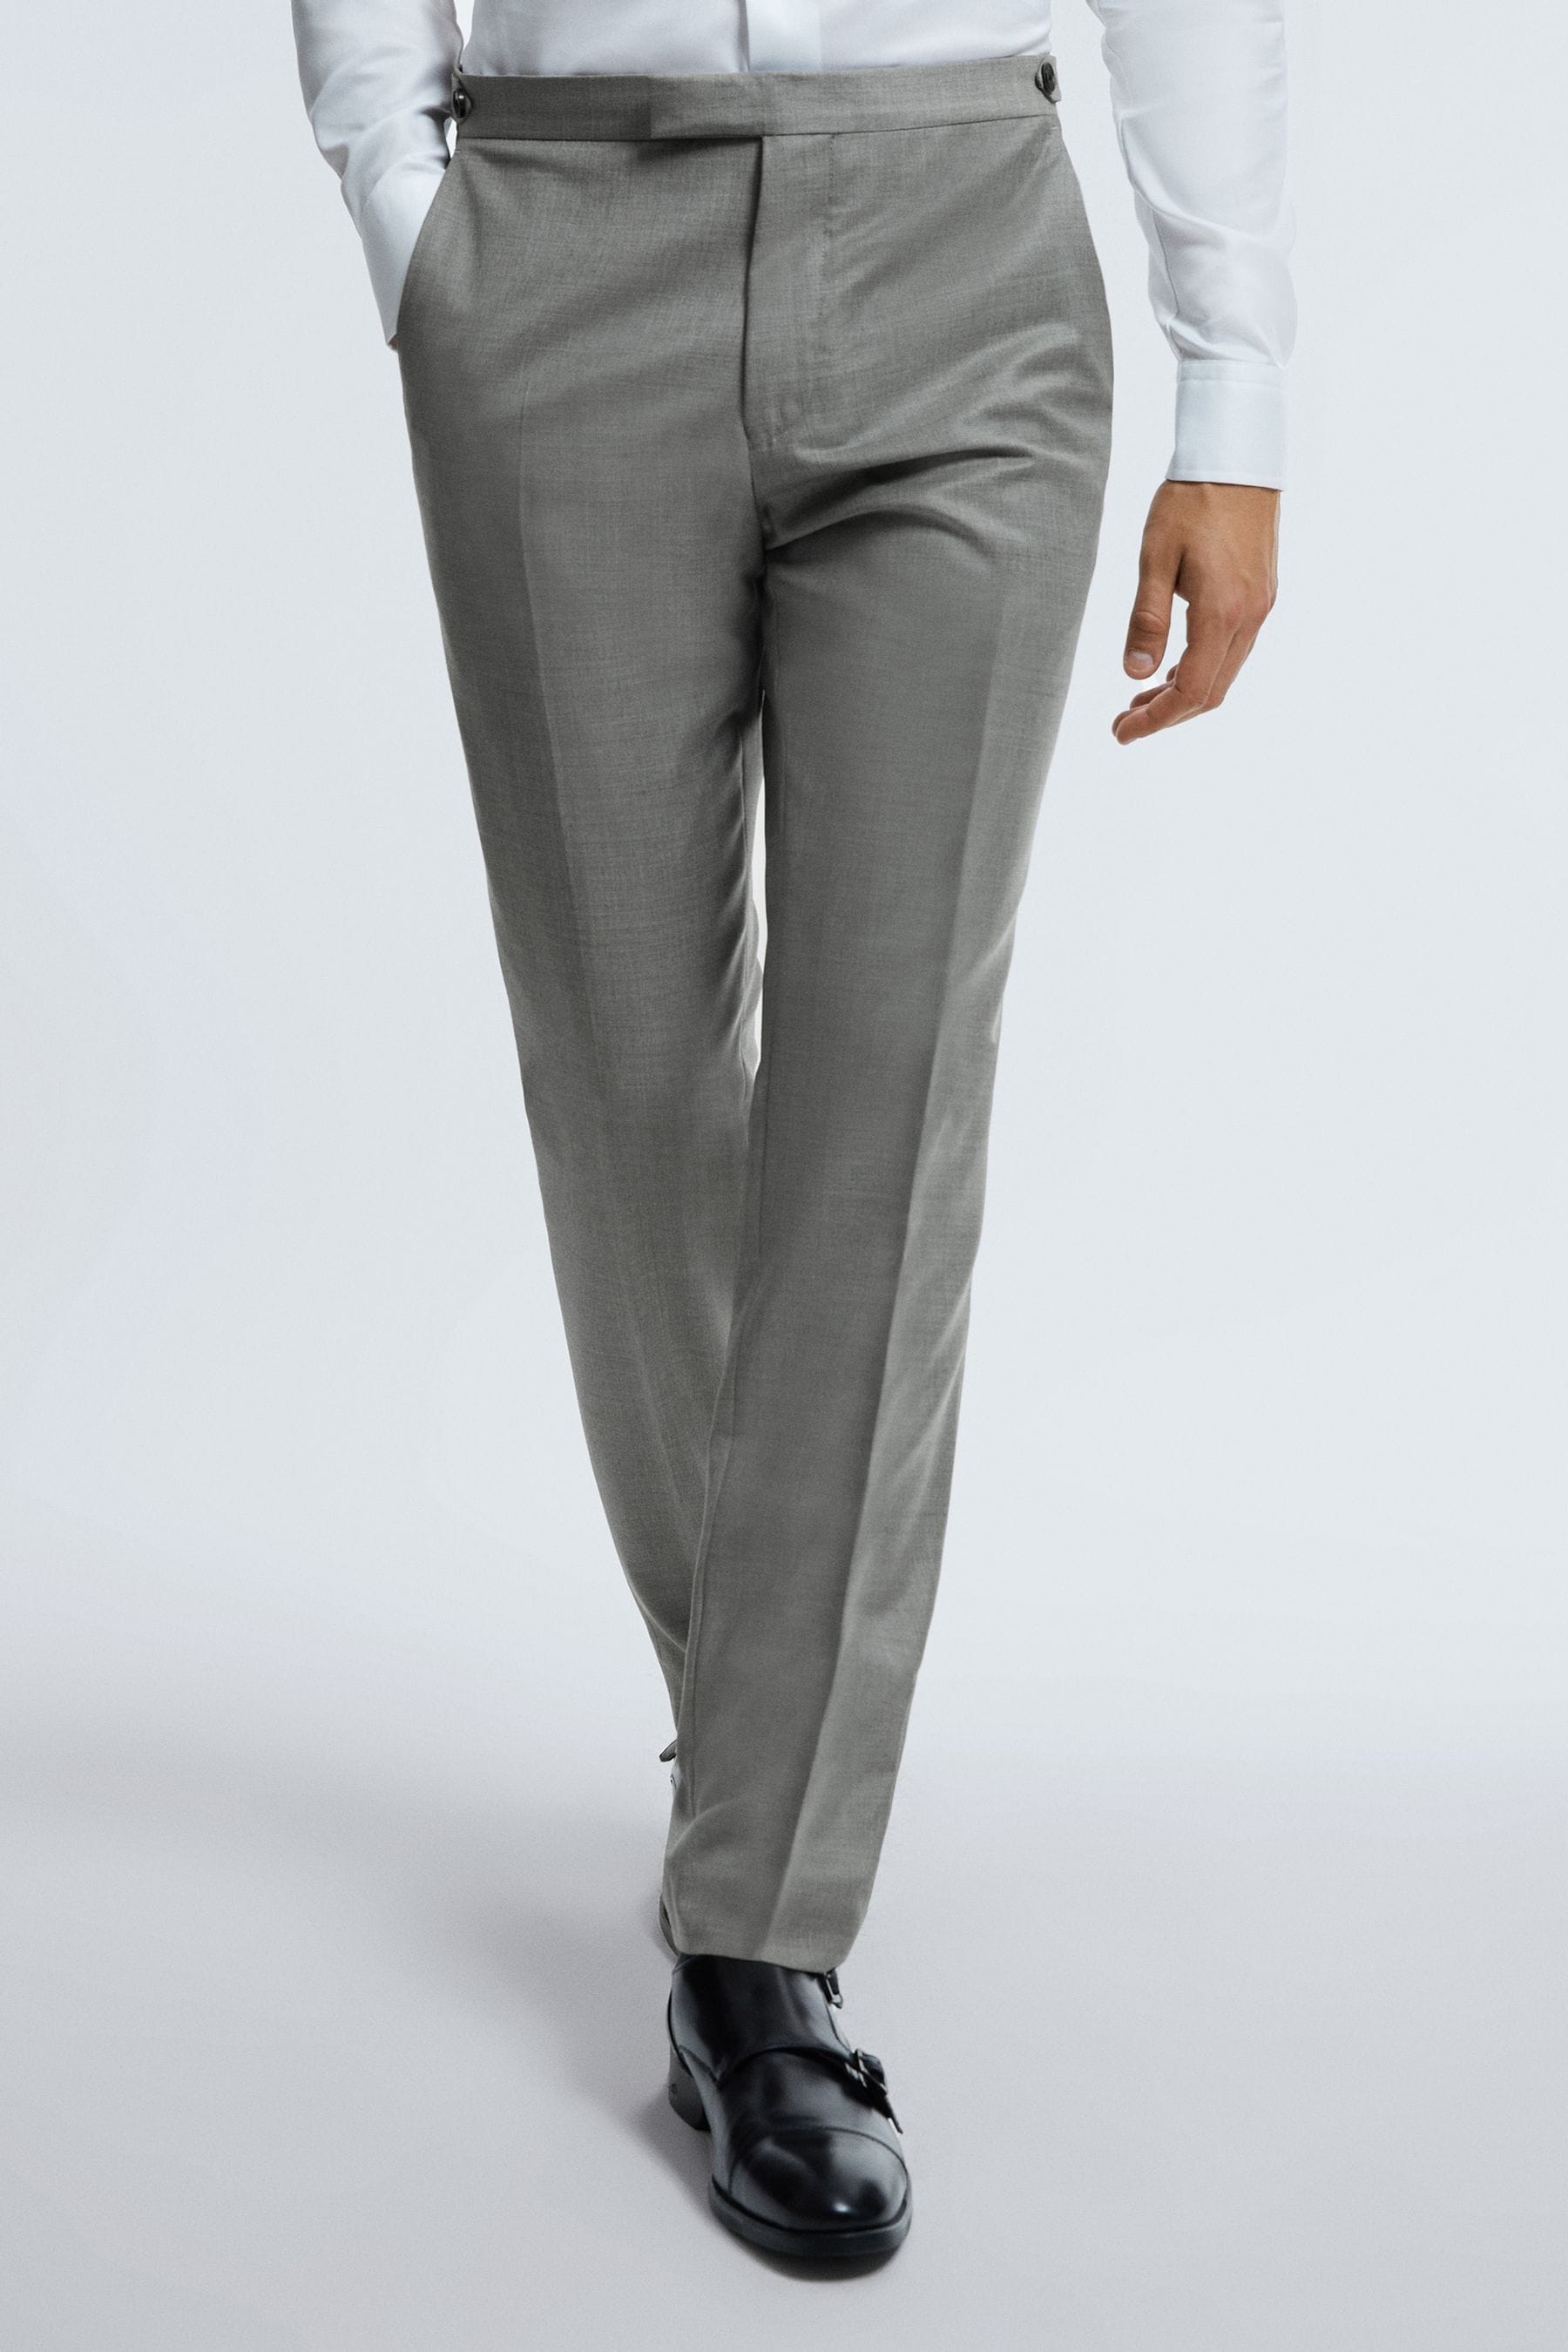 Atelier Wool Cashmere Blend Slim Fit Trousers In Grey Melange